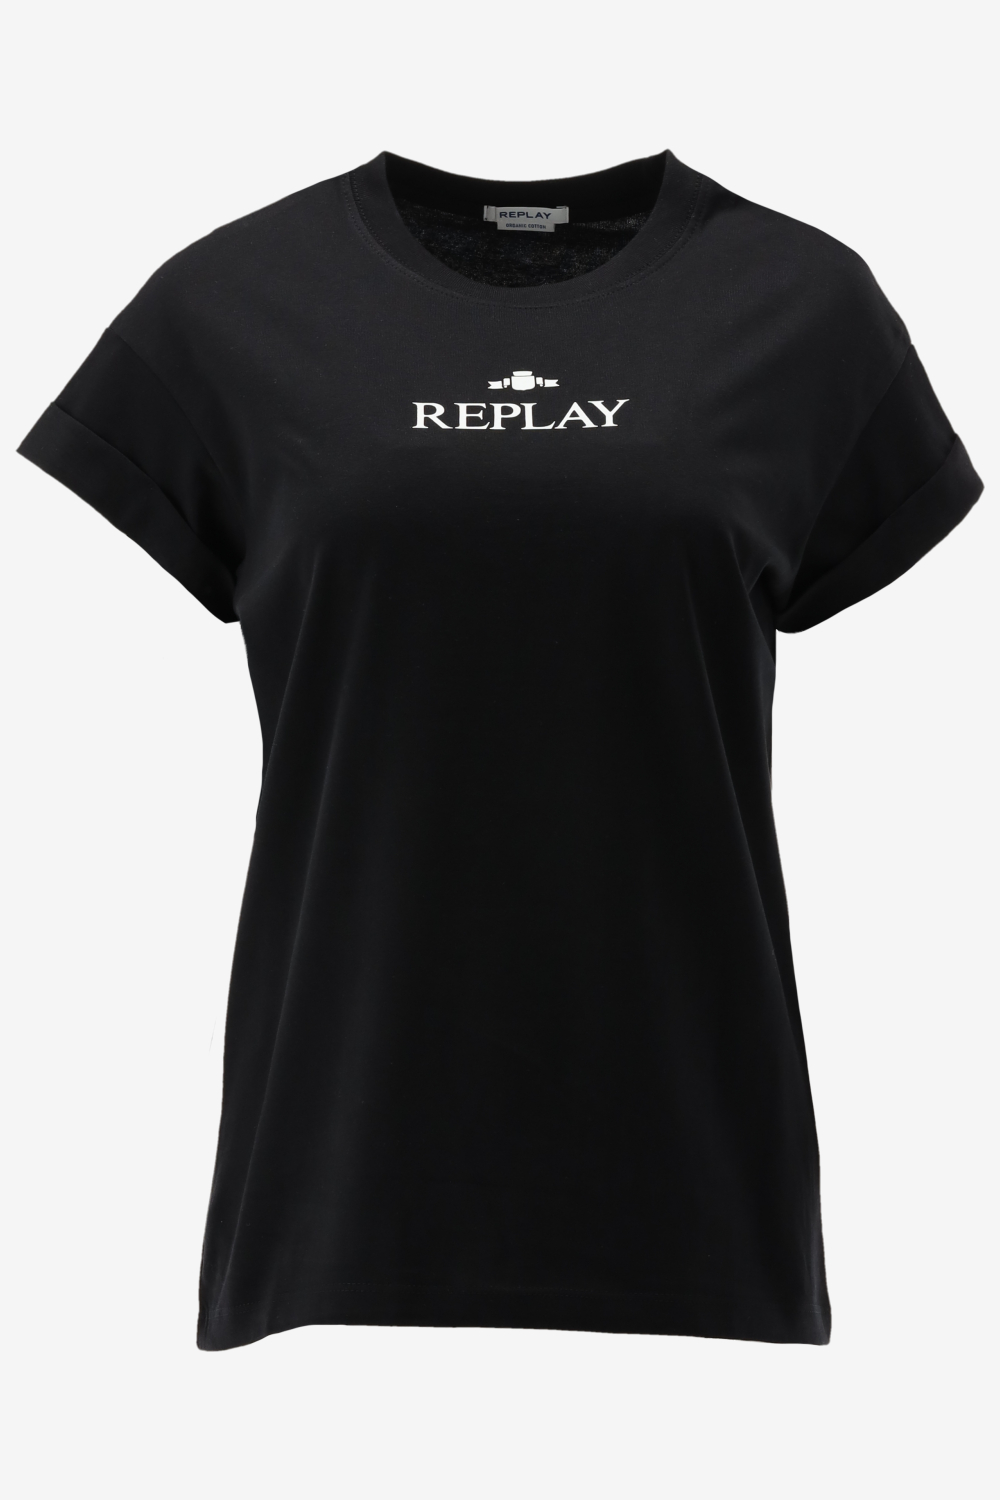 Replay t-shirt maat XS